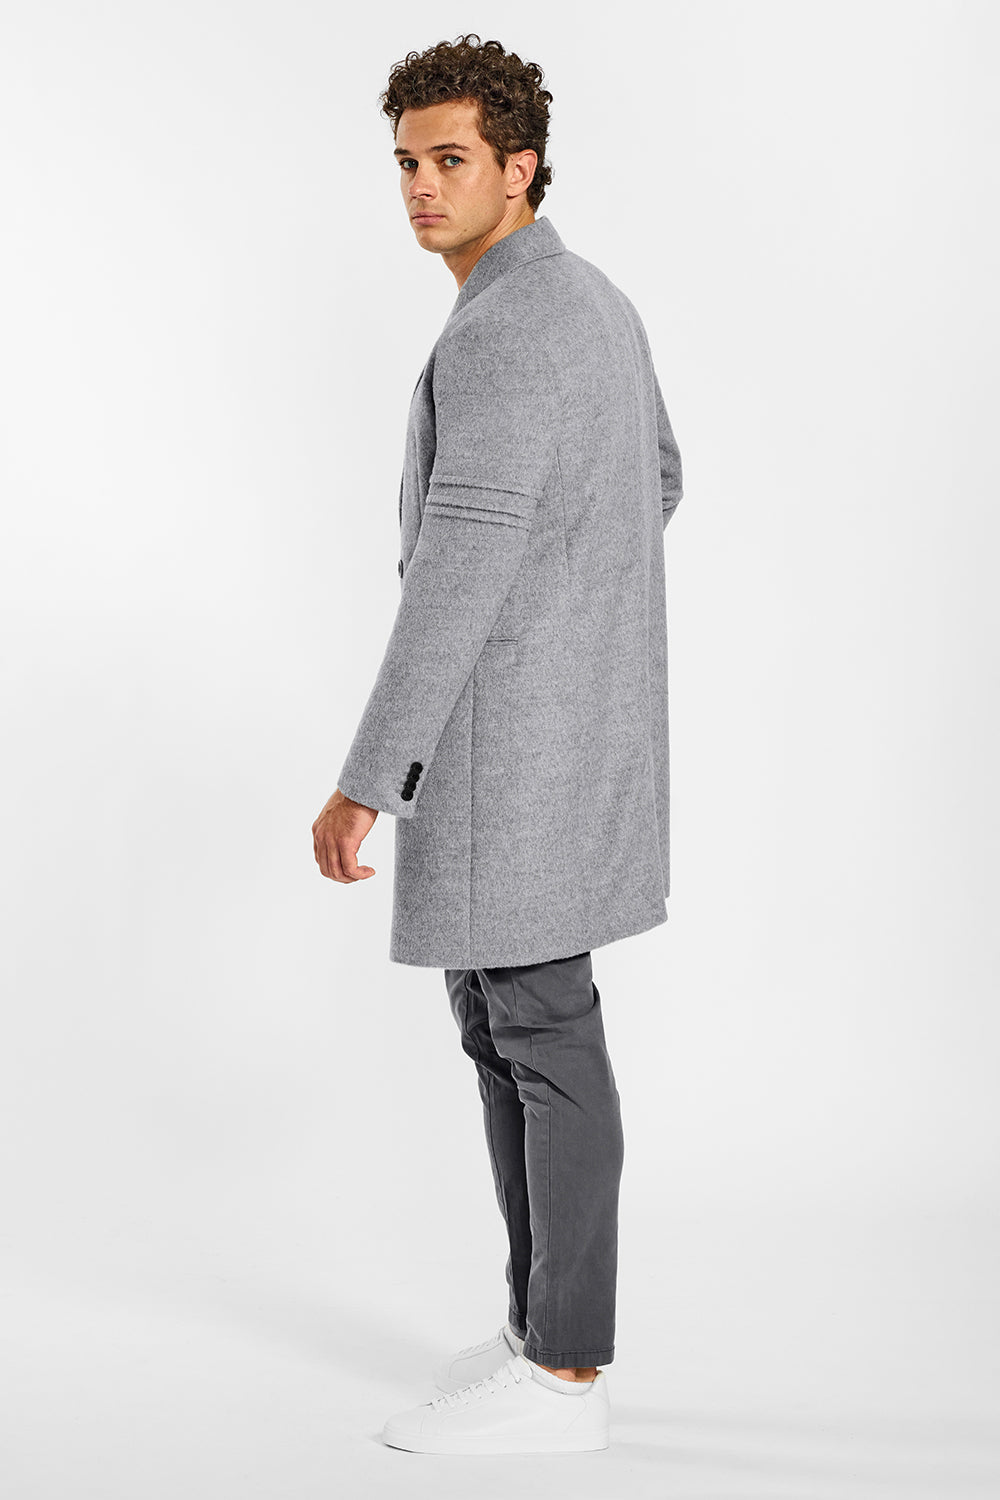 Wool Light Gray Coat / Oversize Wool Overcoat / Autumn Wool Coat / Soft Wool  Overcoat -  Canada